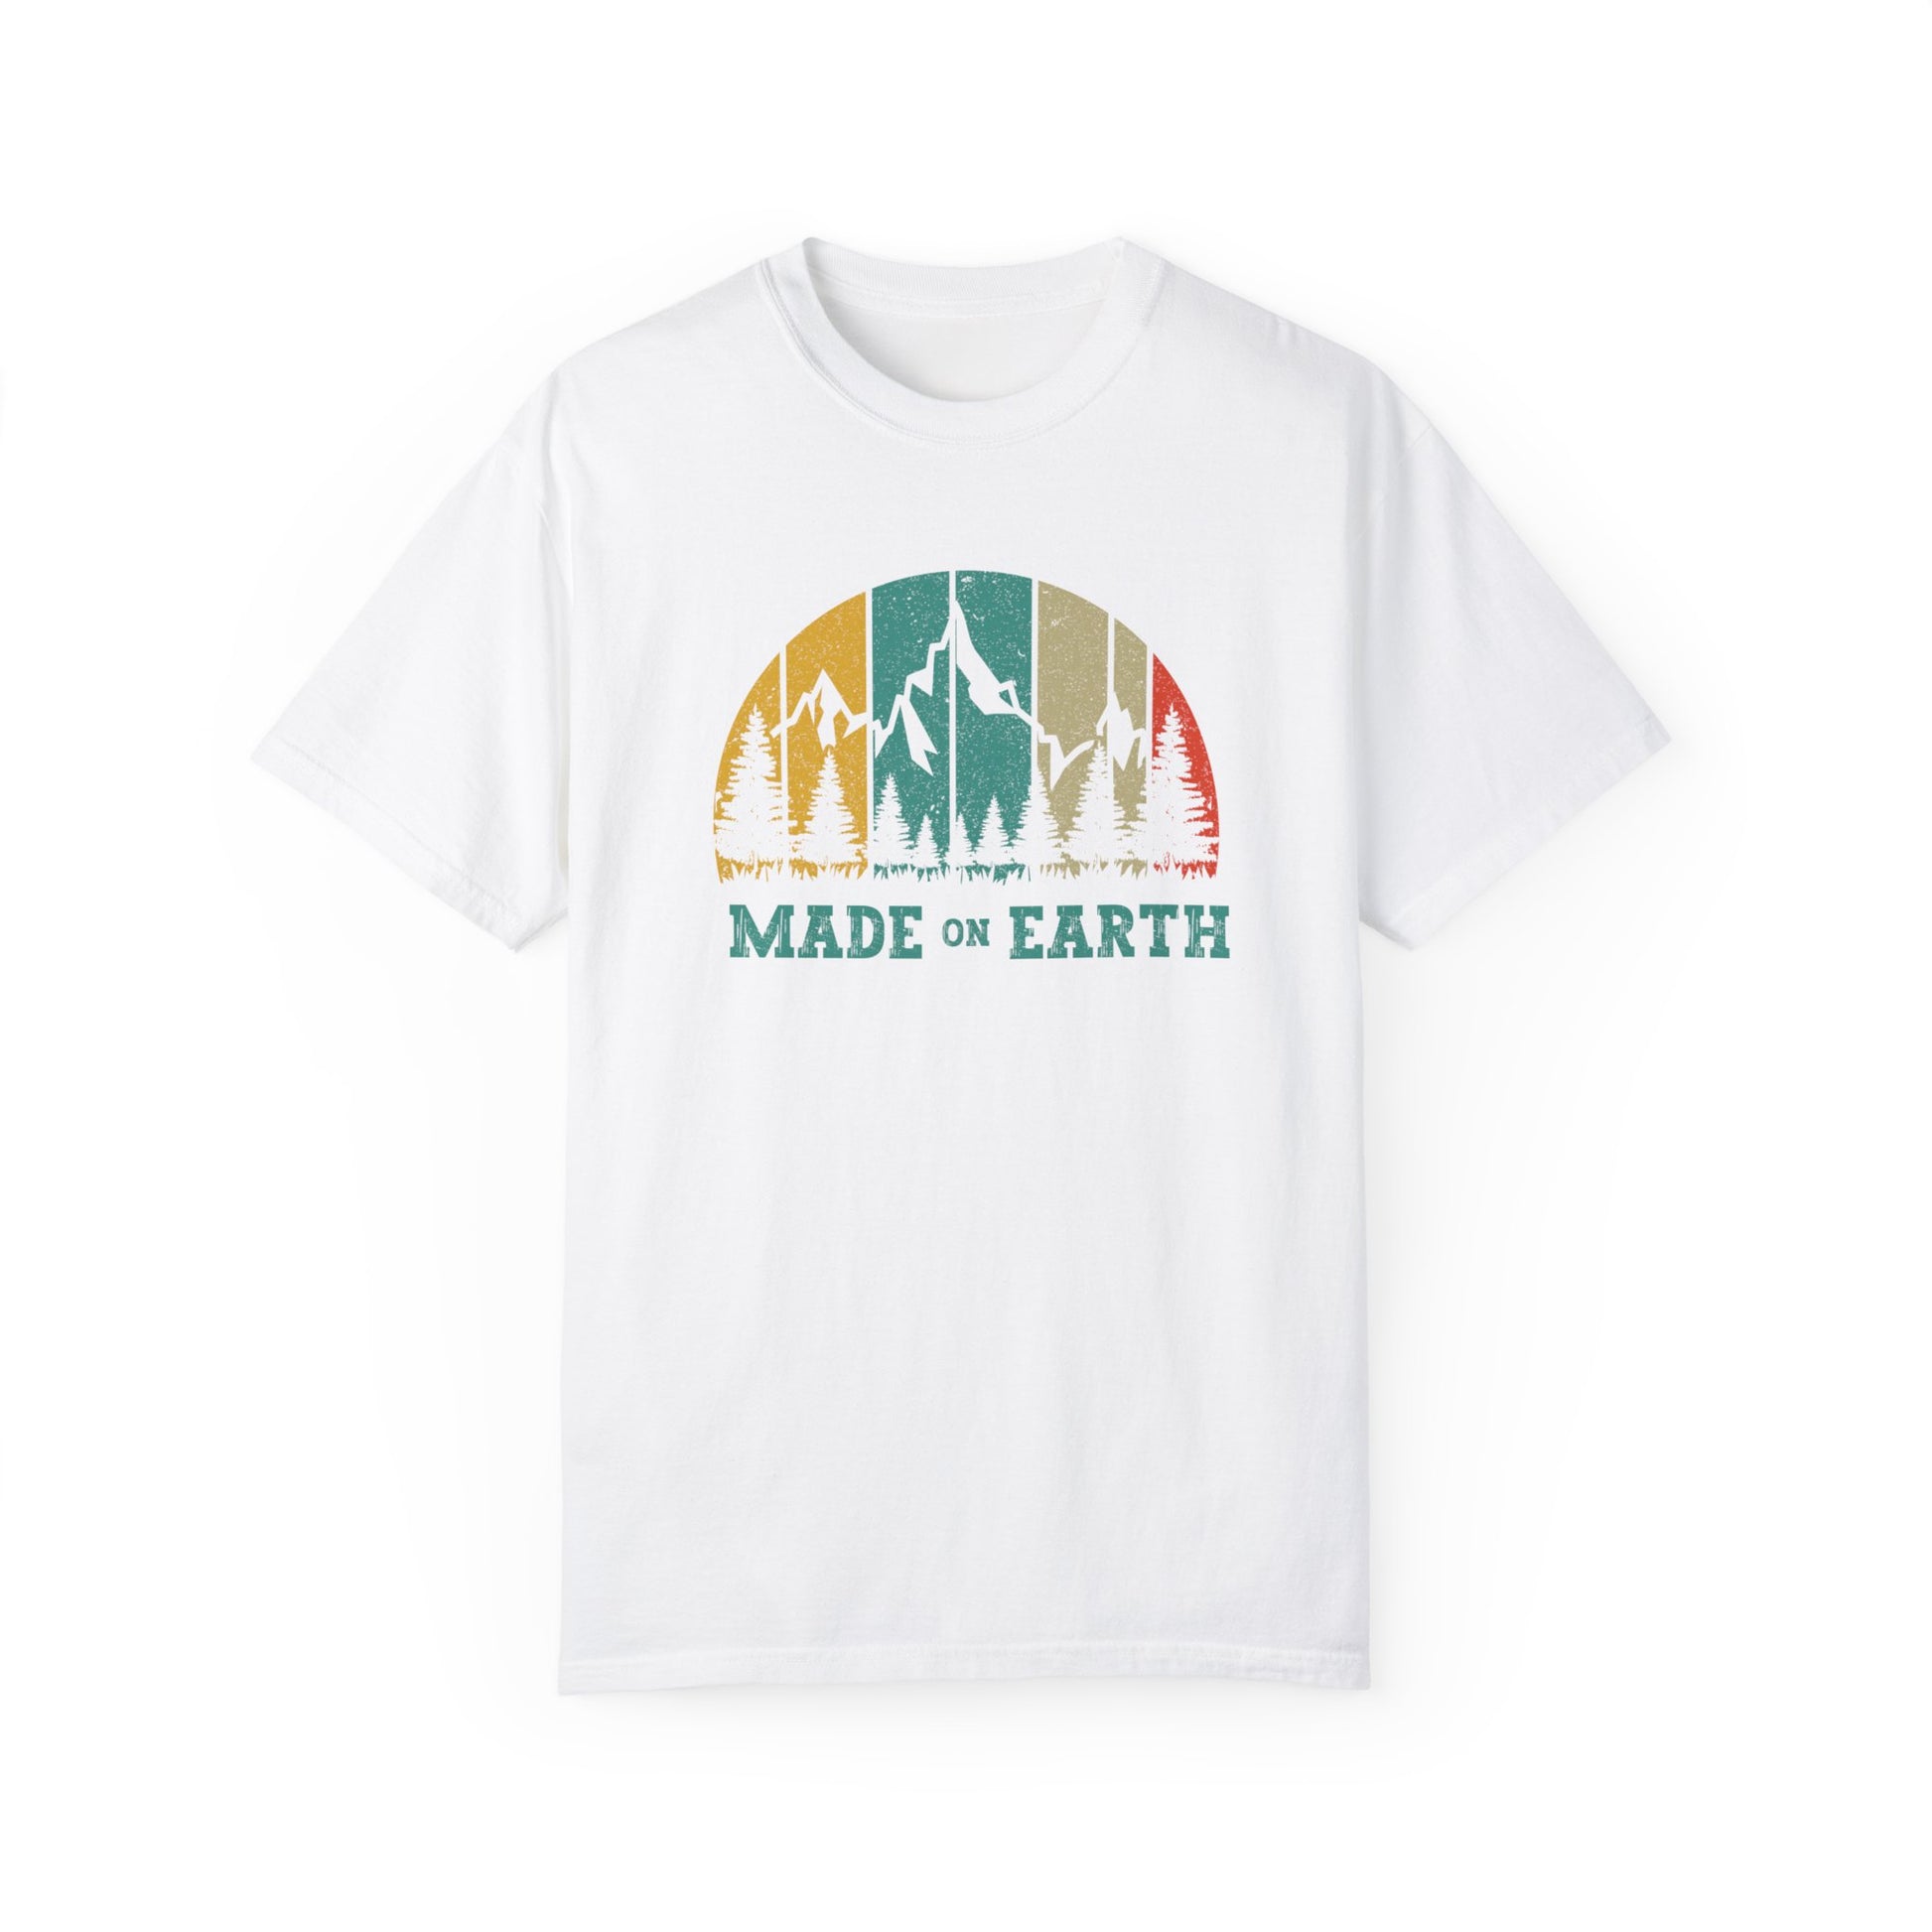 Made on Earth Shirt